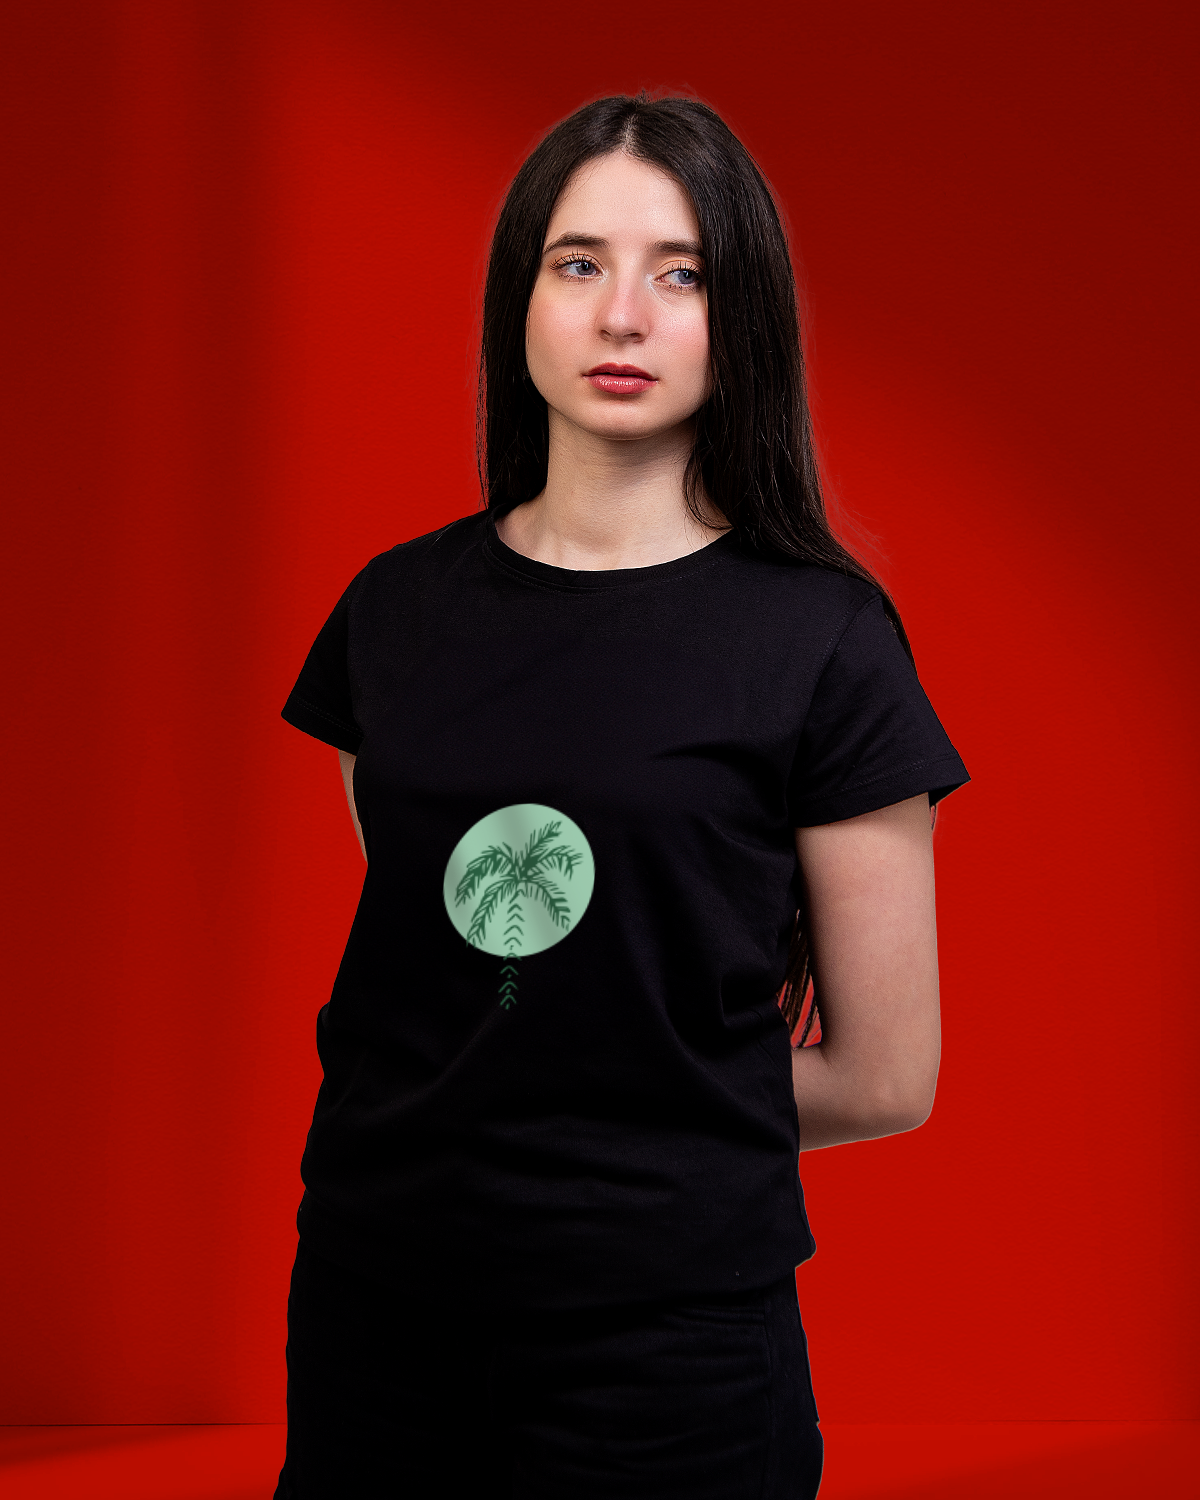 Women’s T-shirt (Palm)